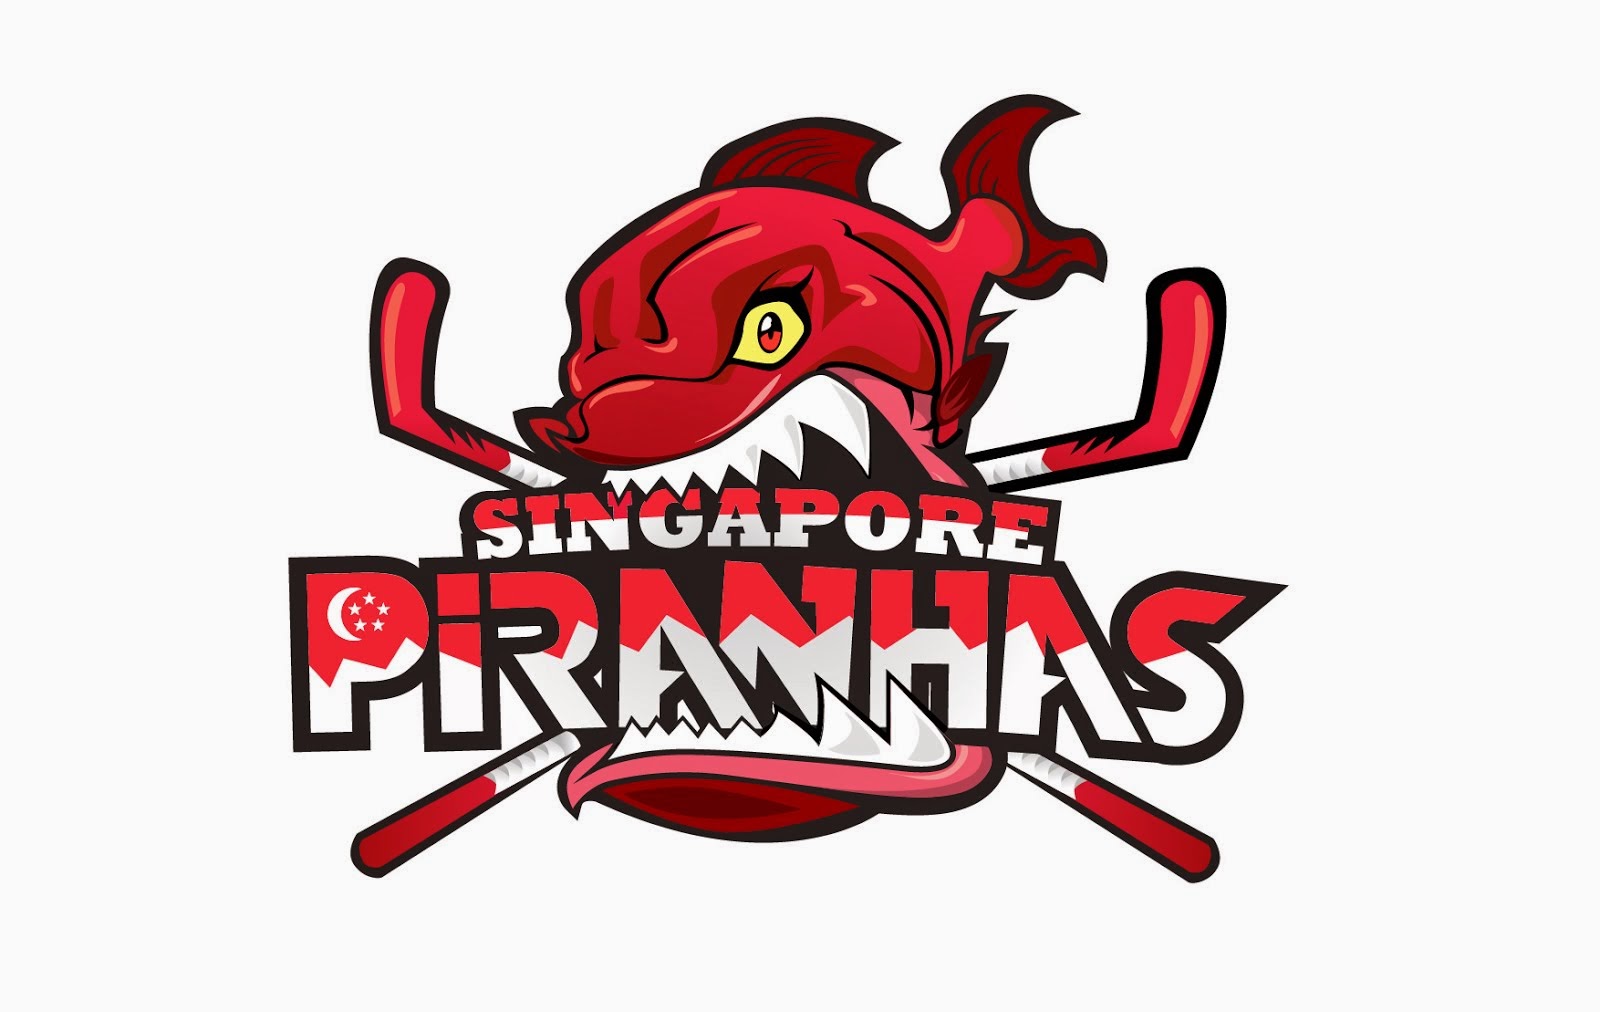 Team Piranhas Singapore 2014